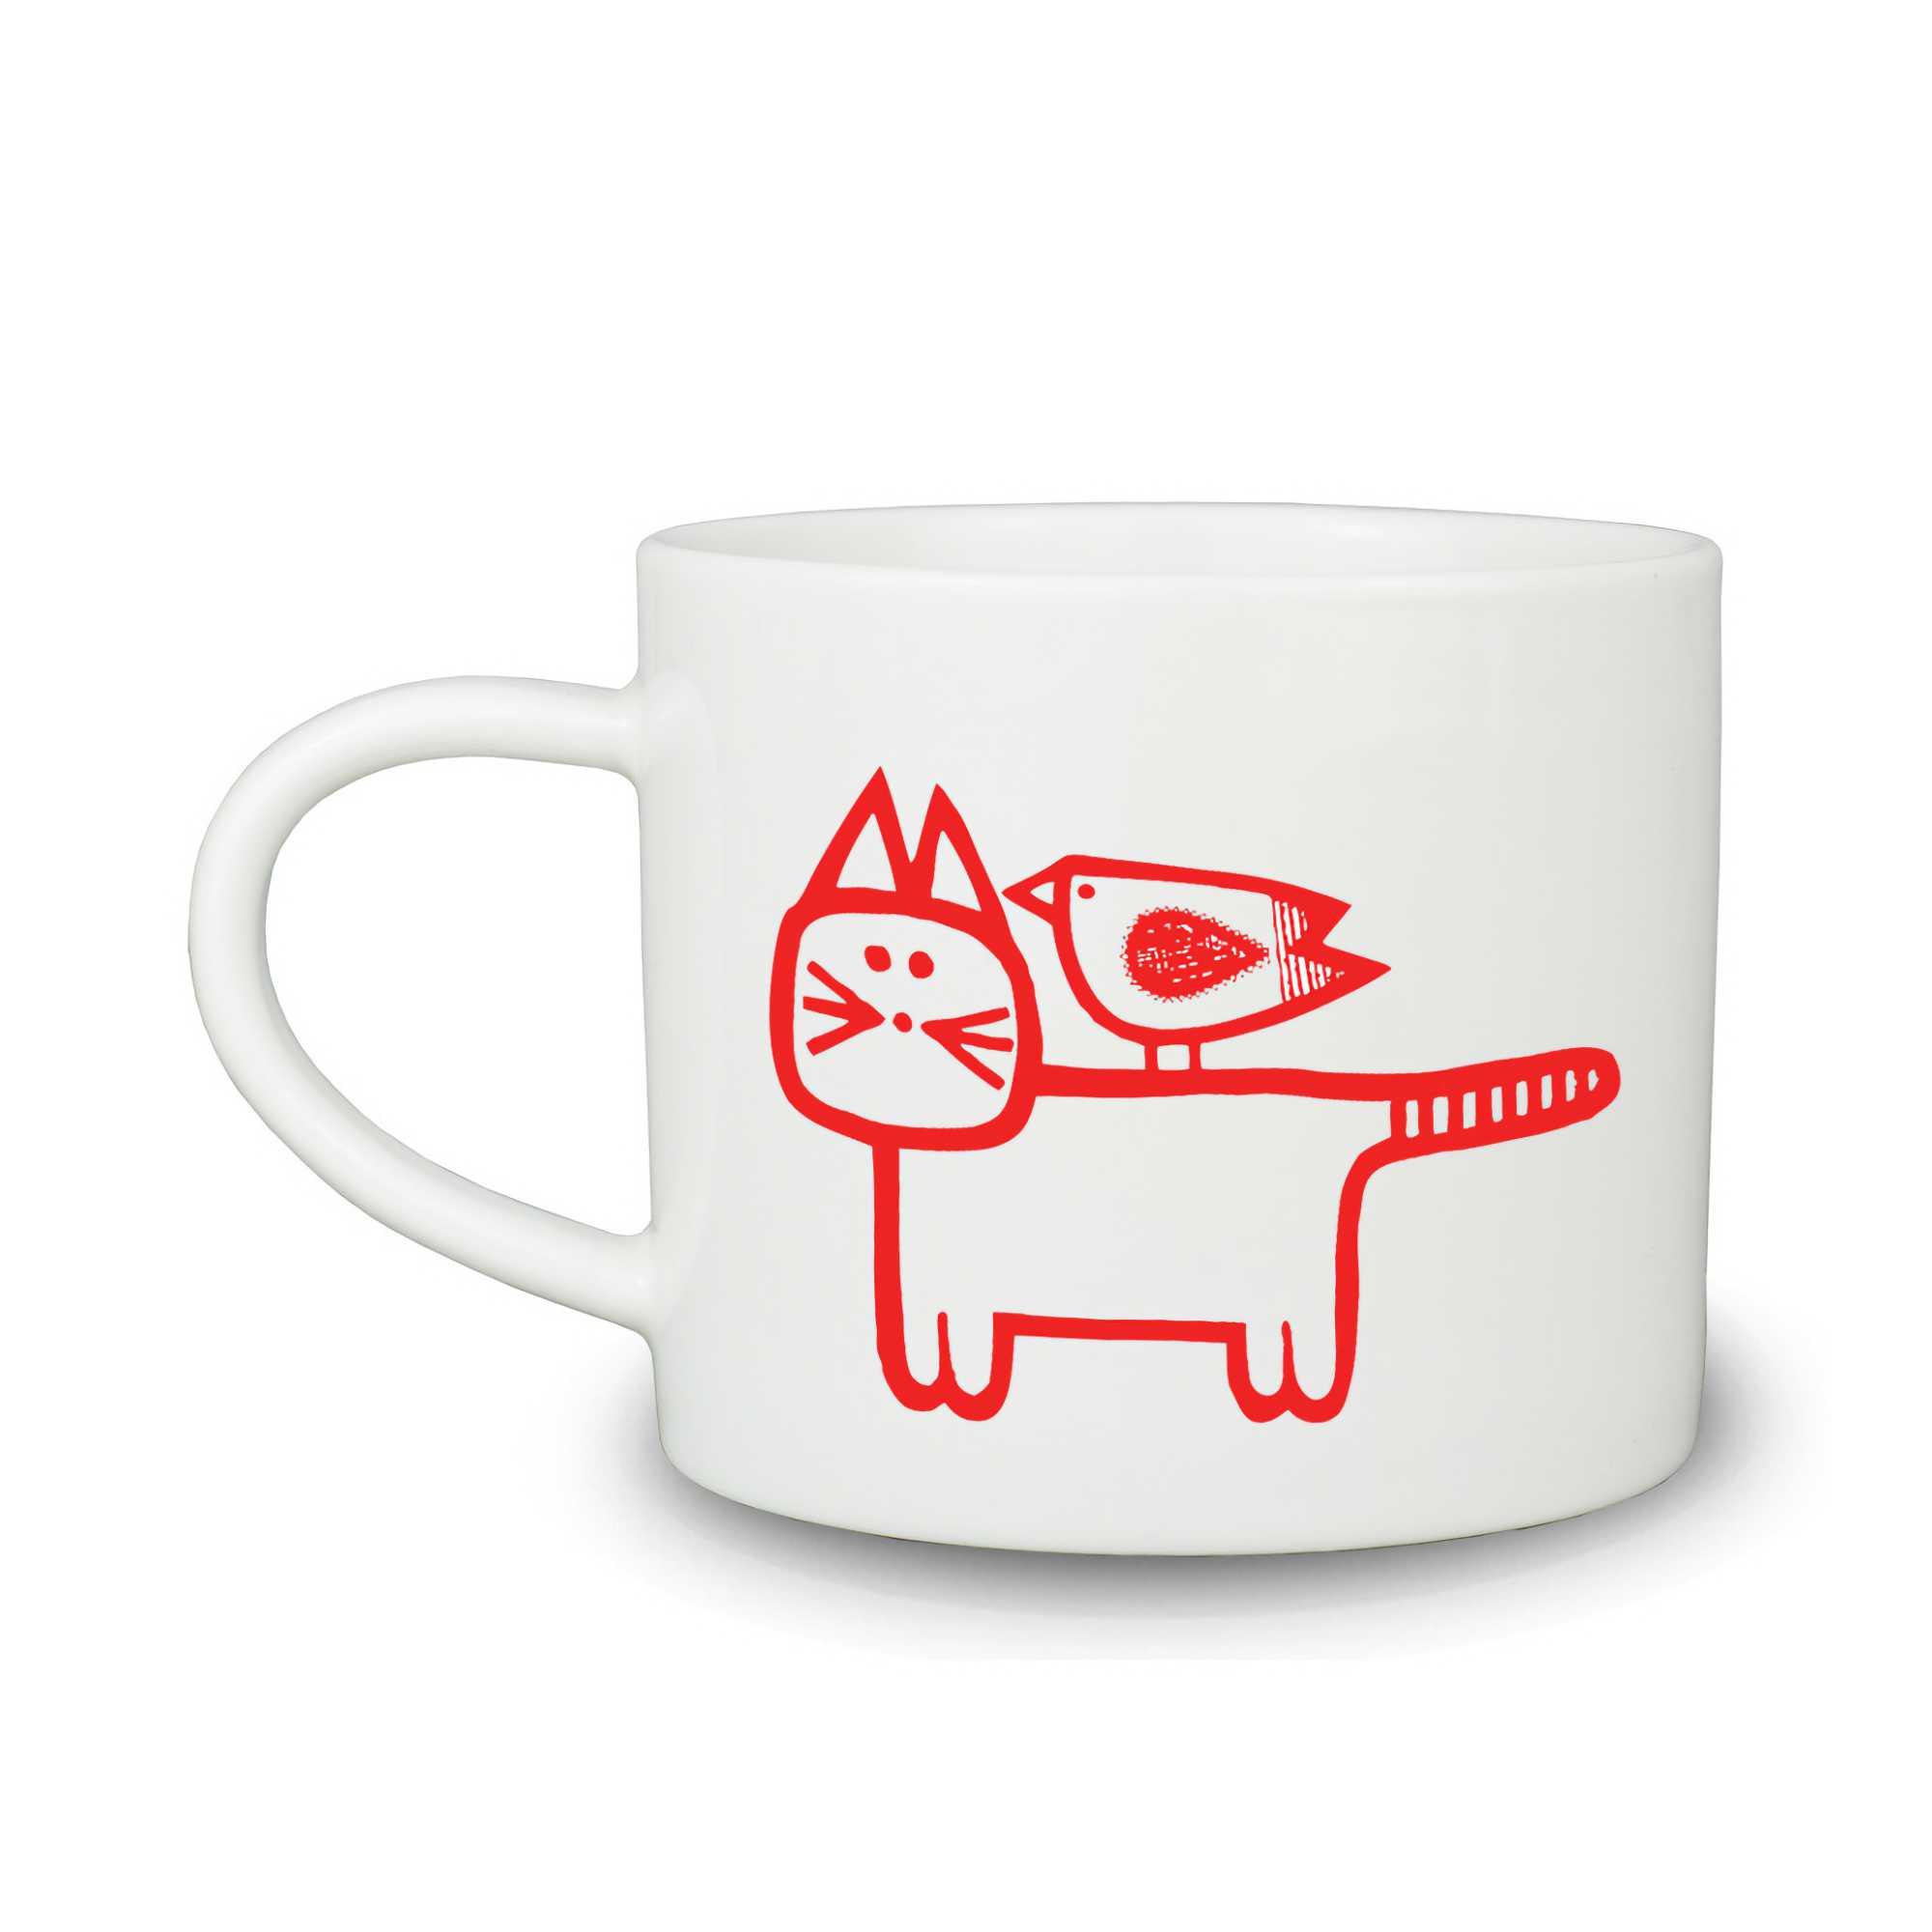 Jane Foster Coffee Mug, Cat & Tori